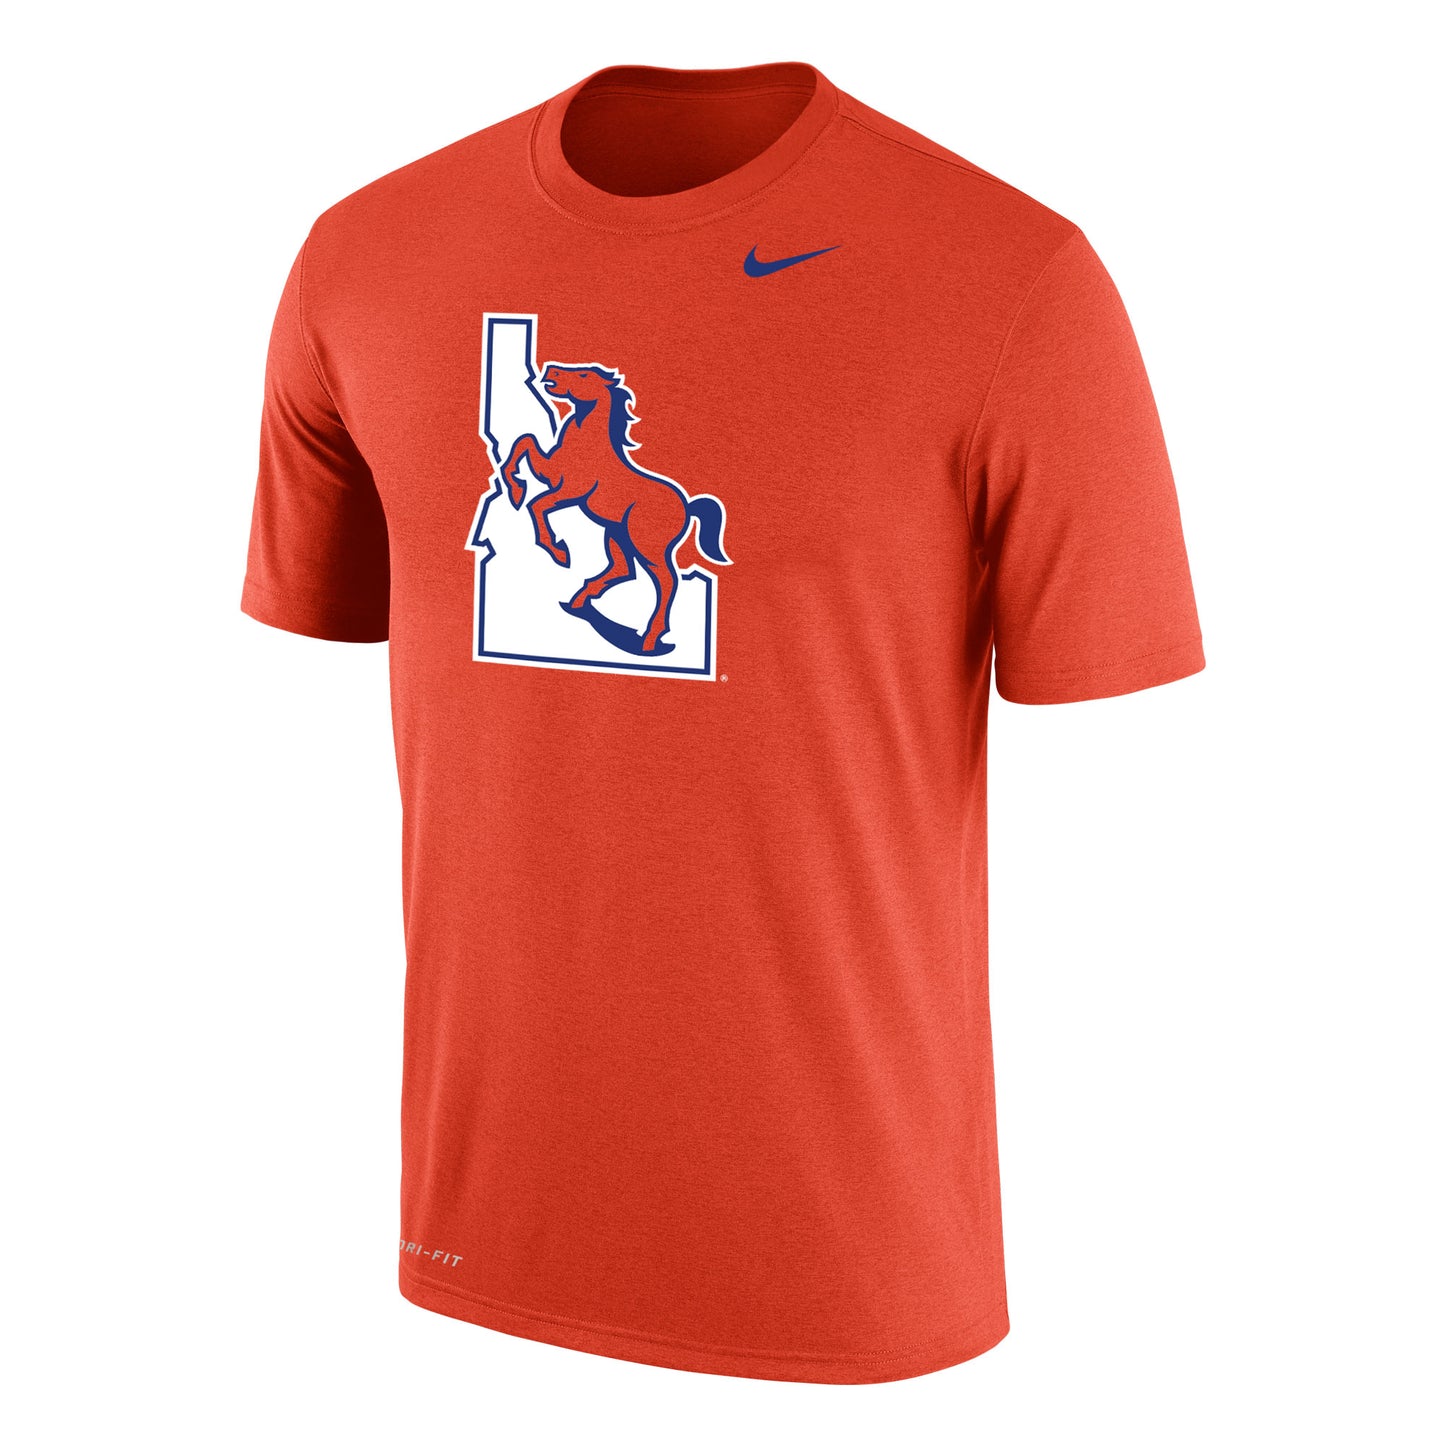 Boise State Broncos Nike Men's Vault Logo Dri-Fit Cotton Tee (Orange)